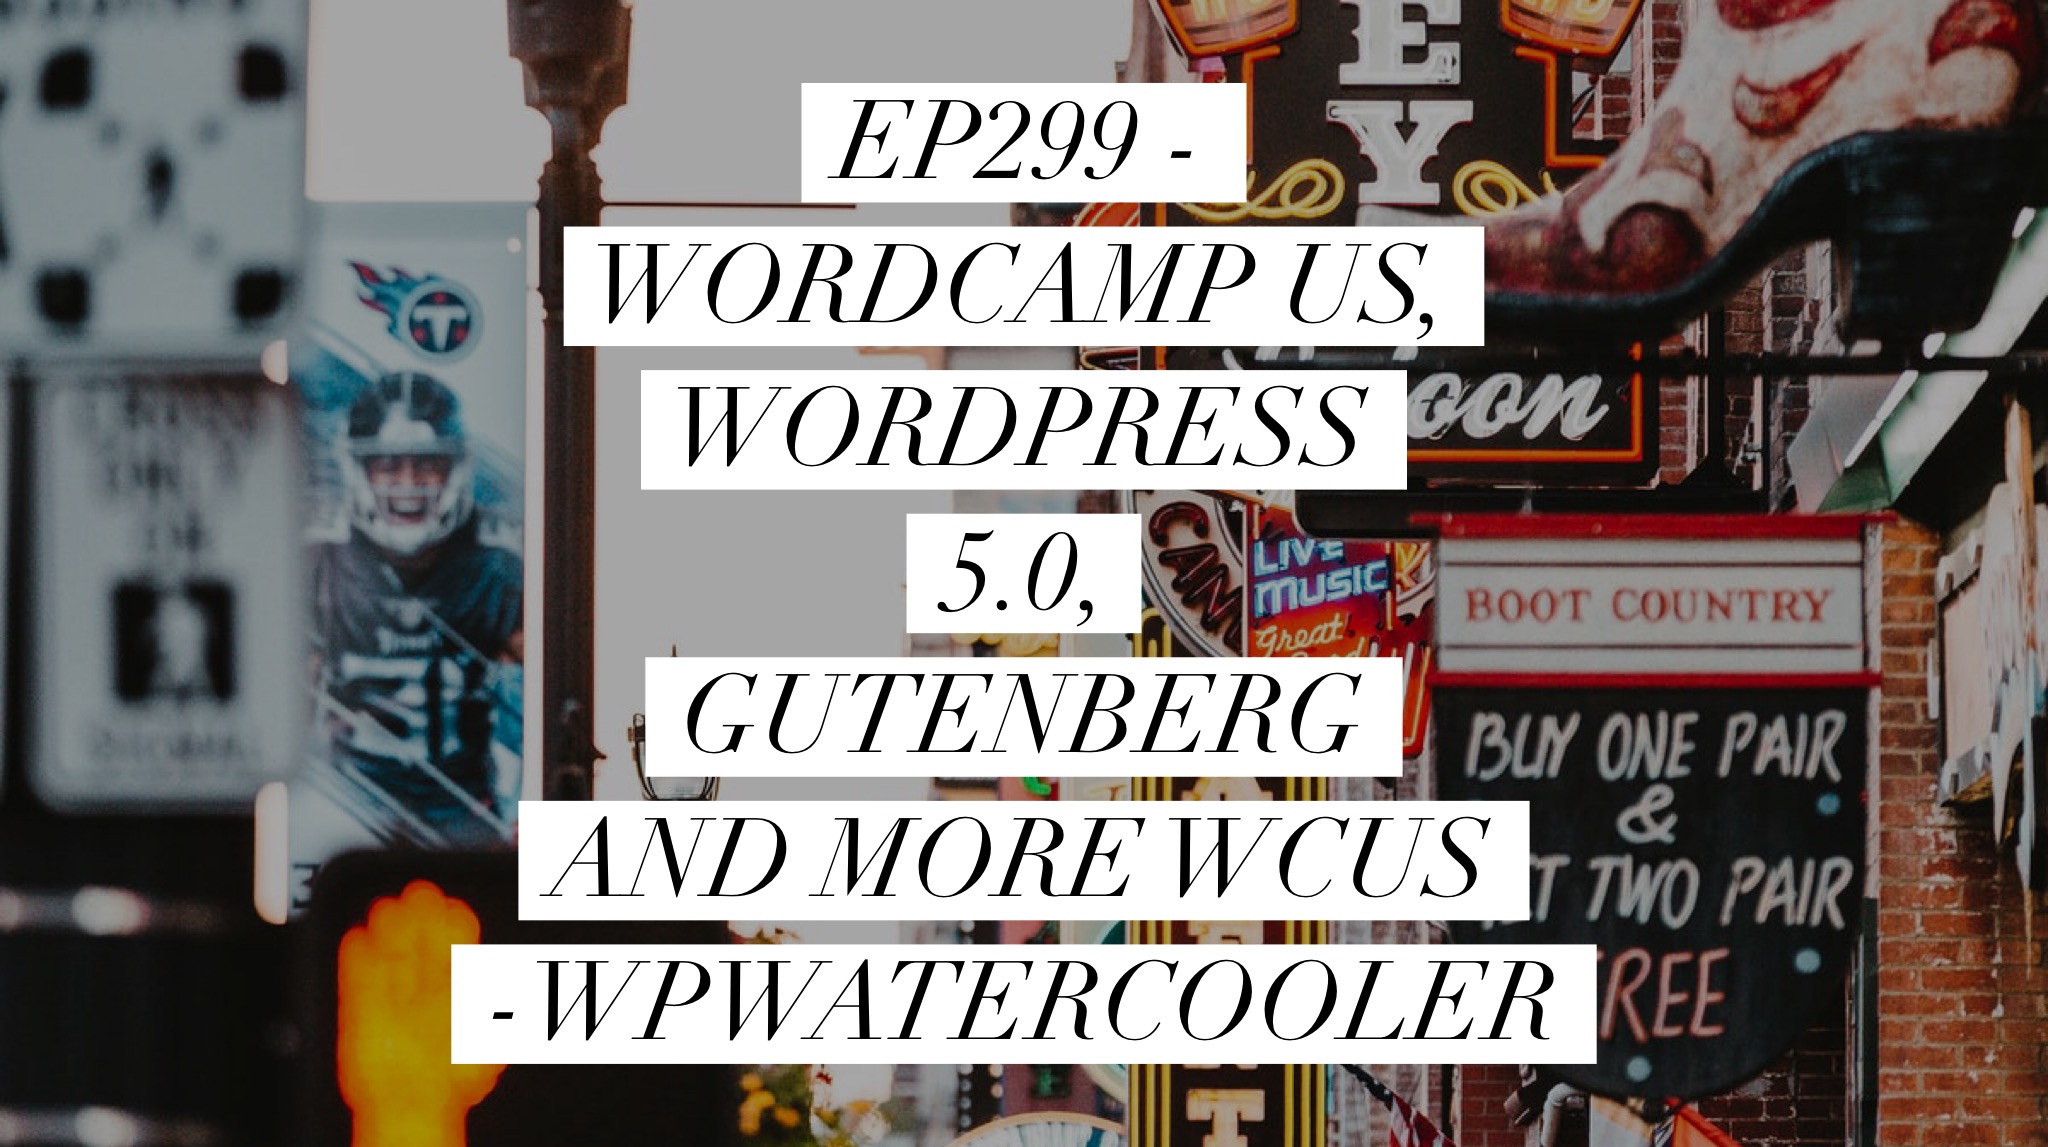 EP299 - WordCamp US, WordPress 5.0, Gutenberg and more WCUS - WPwatercooler